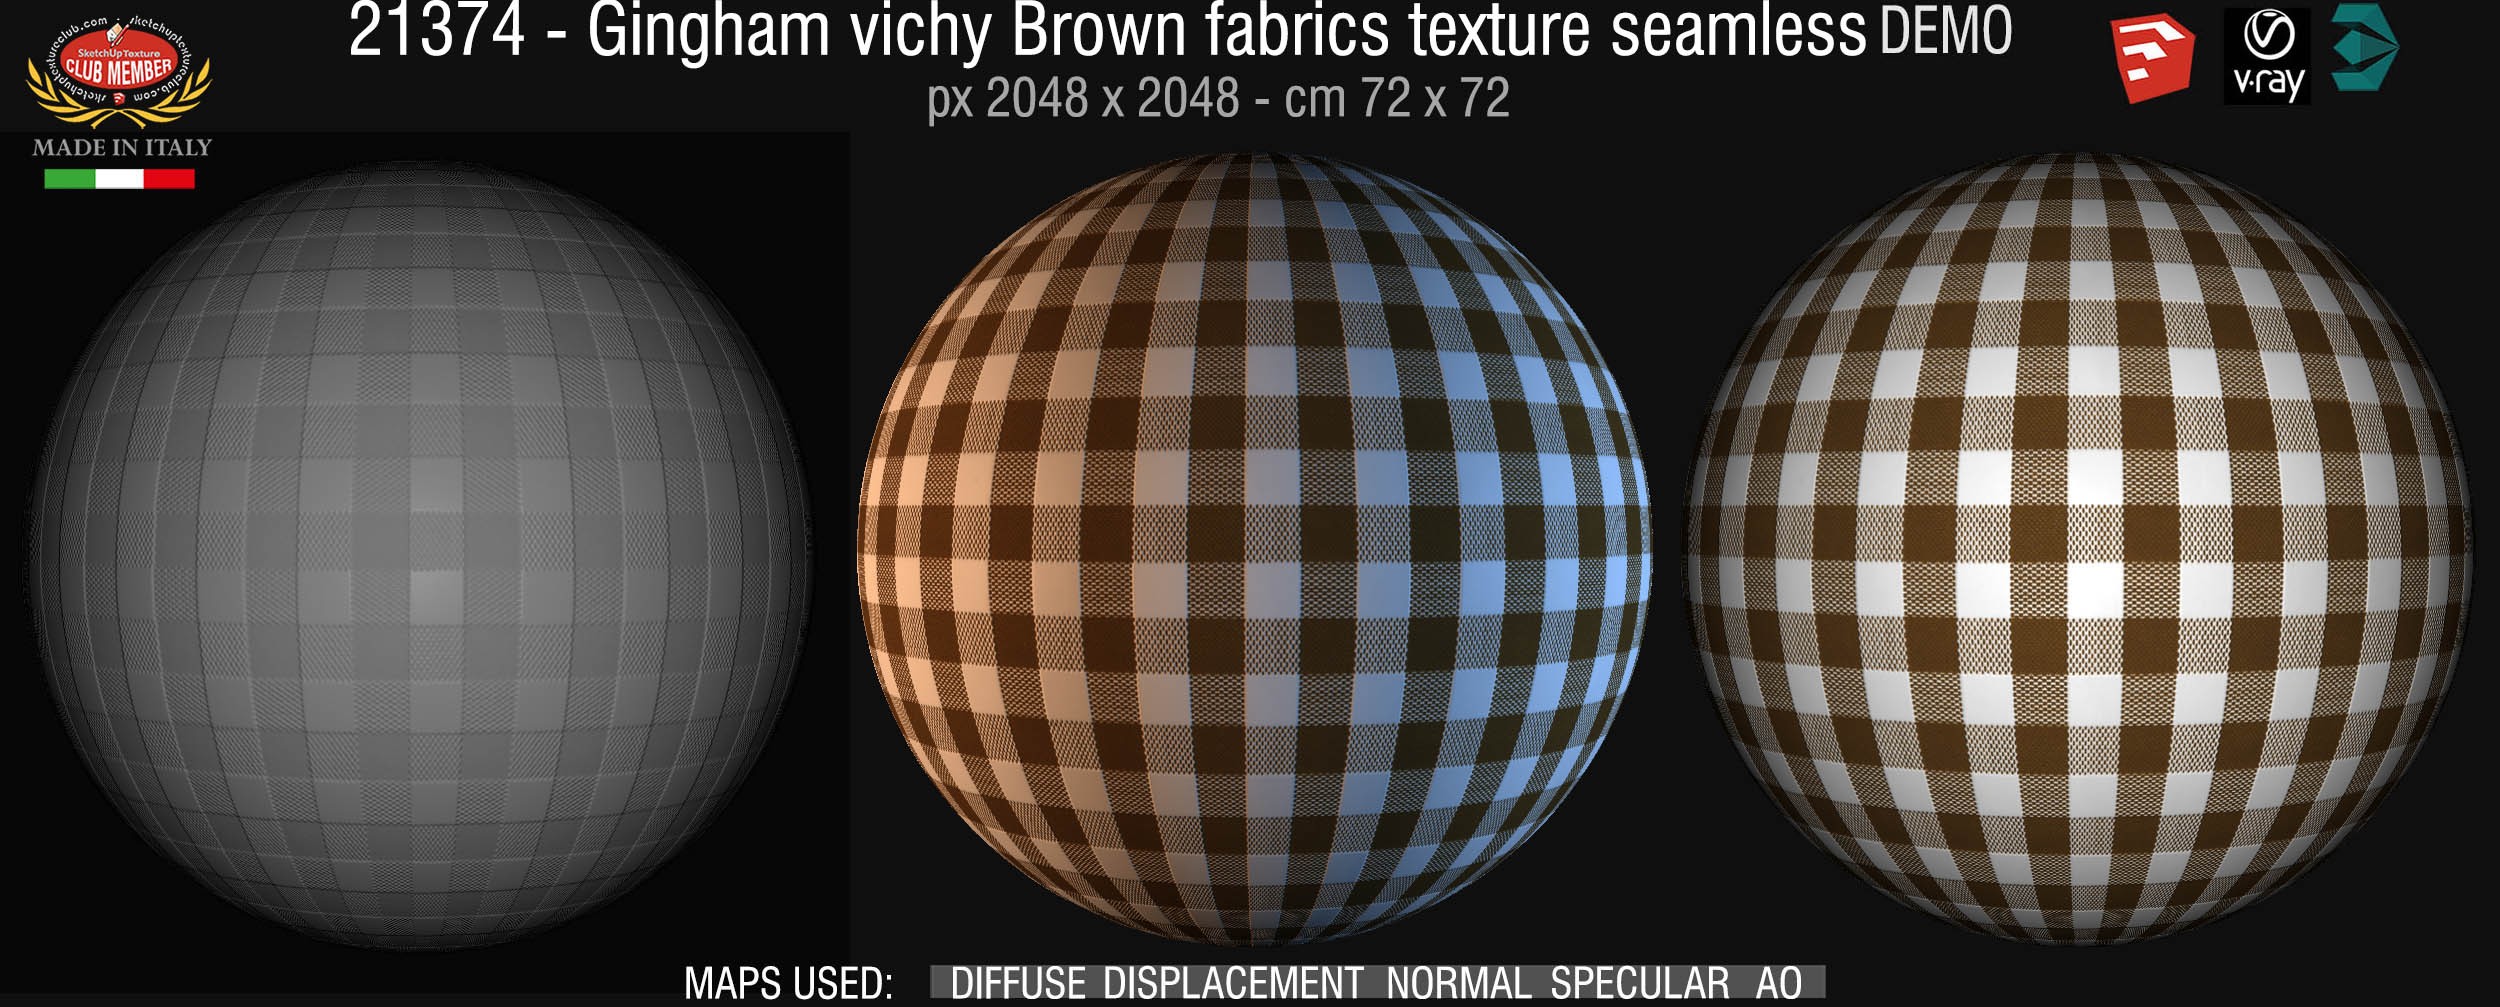 21374  Gingham vichy Brown fabrics texture + maps DEMO